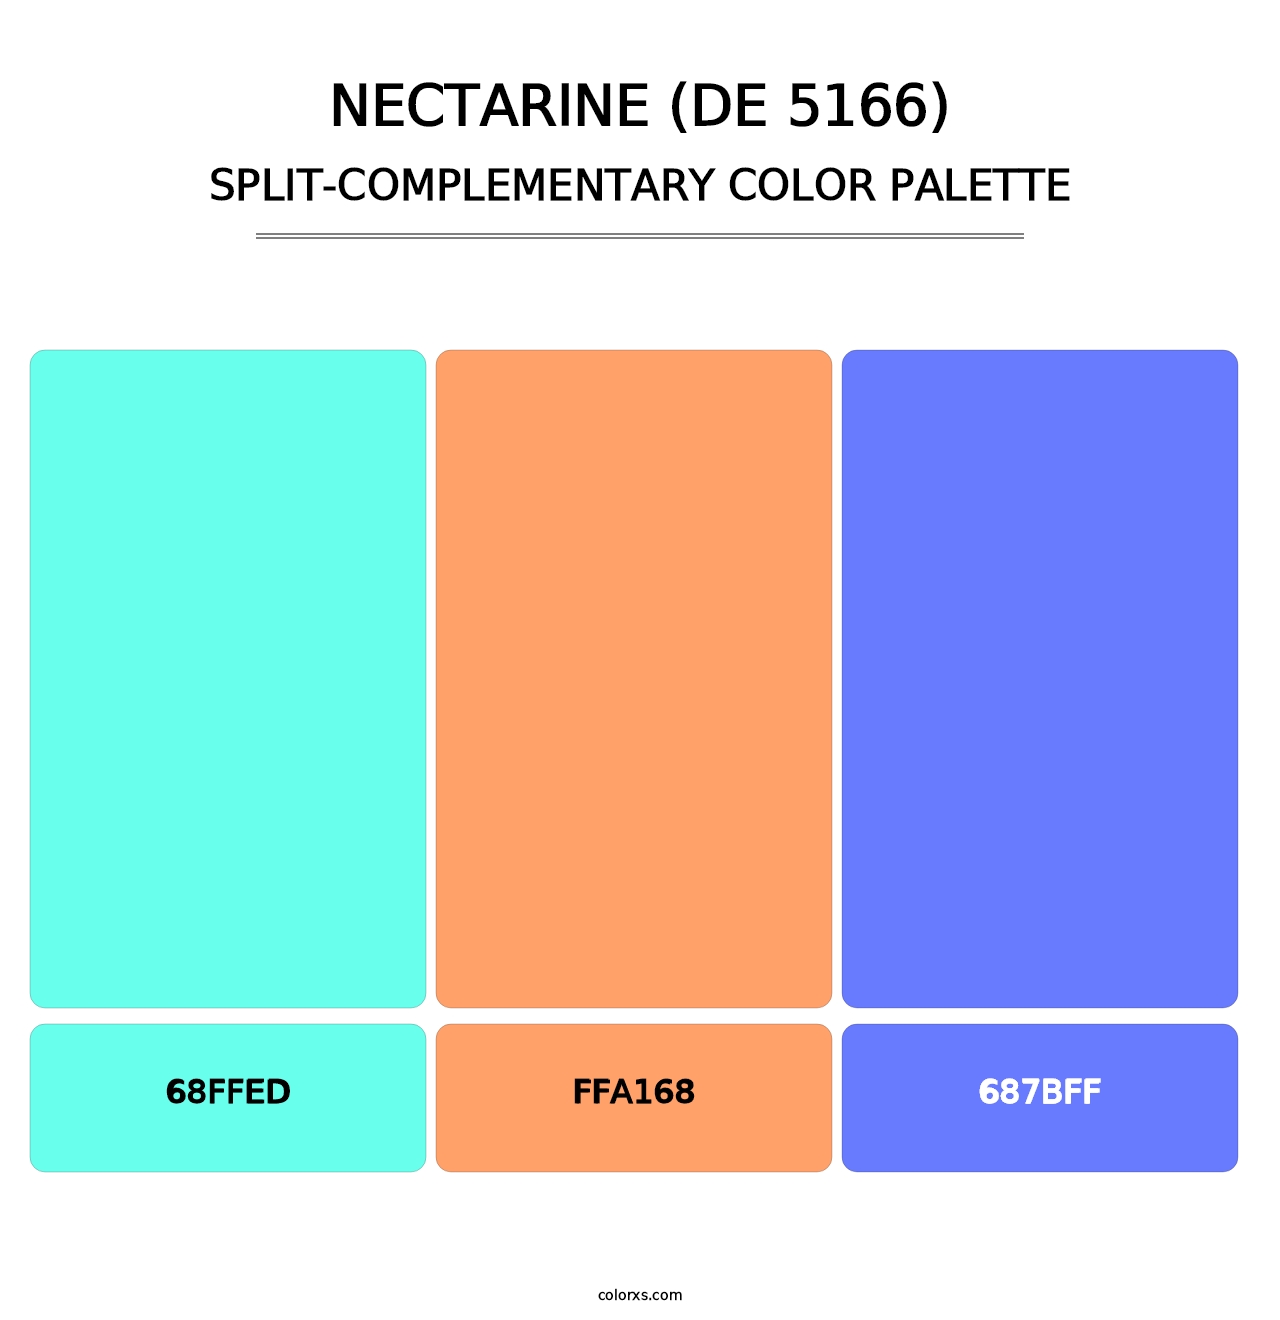 Nectarine (DE 5166) - Split-Complementary Color Palette